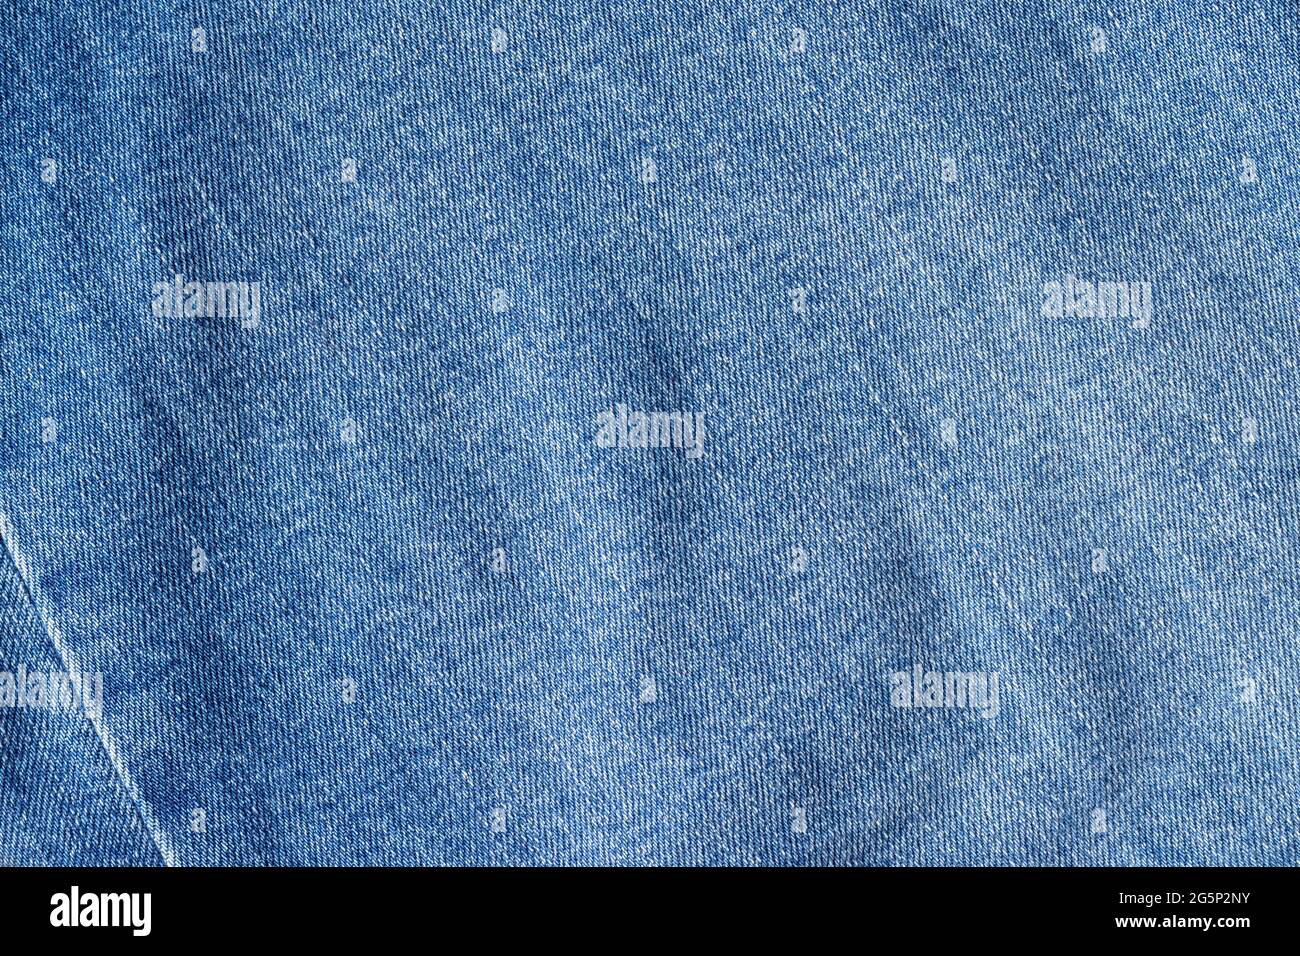 Blue jeans fabric texture. Denim background Stock Photo - Alamy